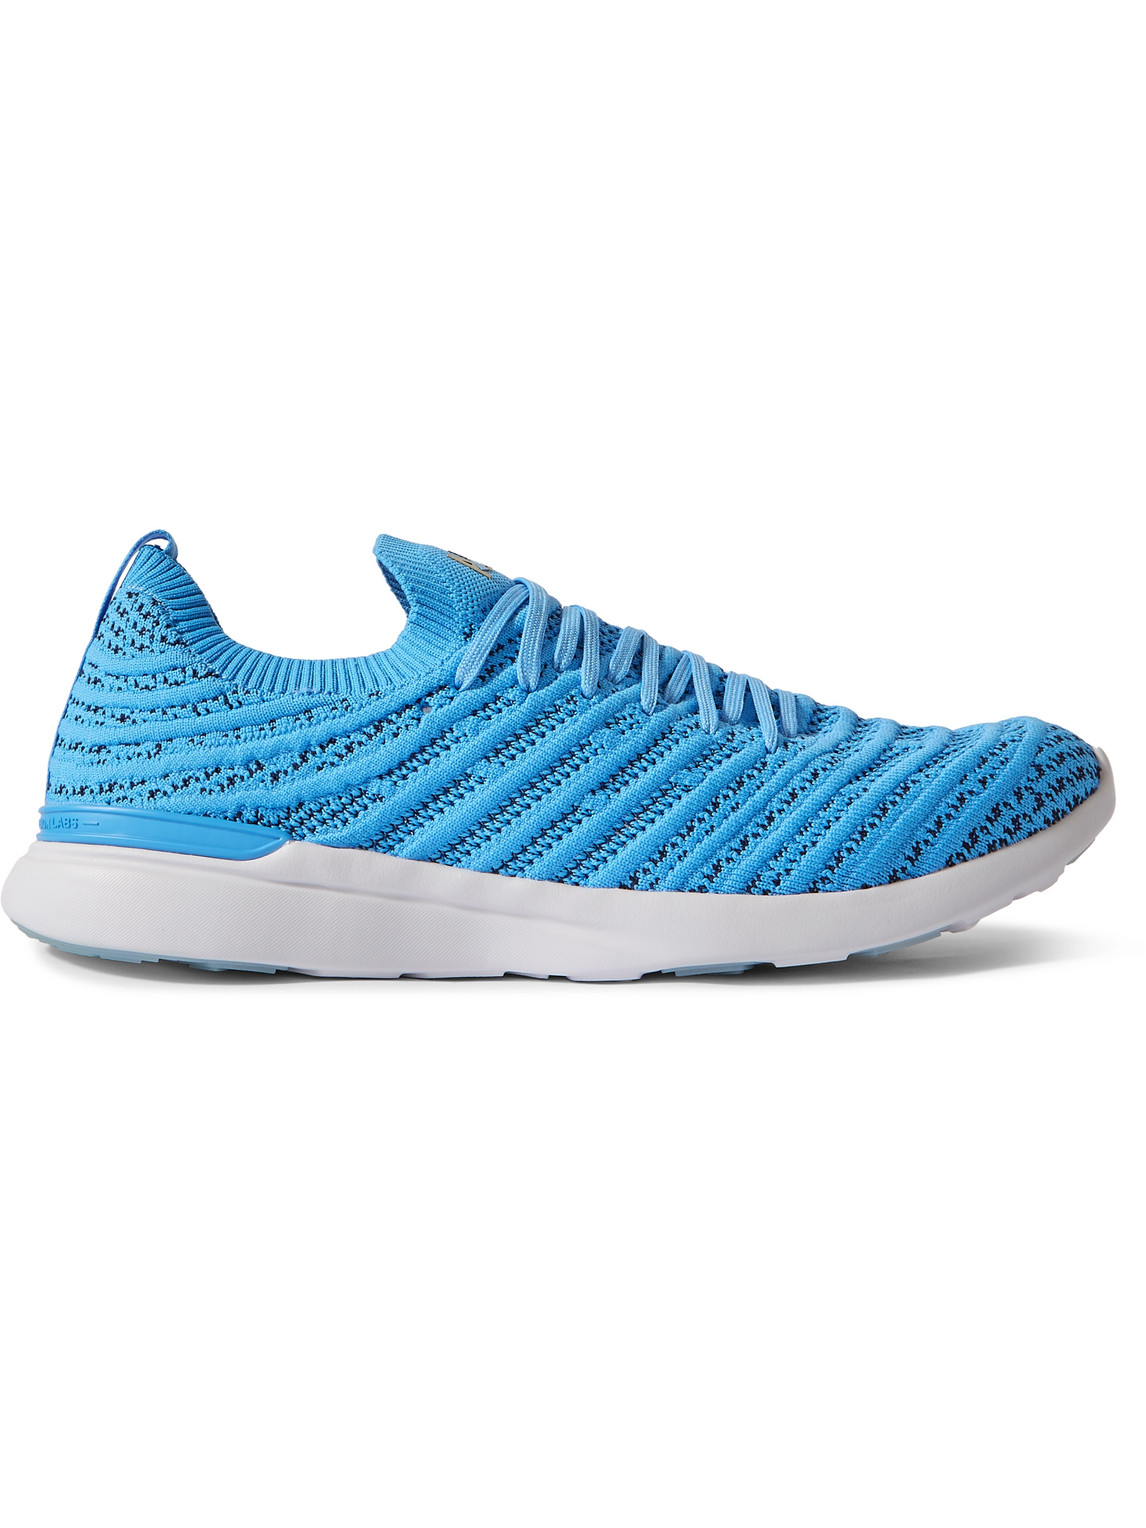 Apl Athletic Propulsion Labs Techloom Wave Running Sneakers In Blue